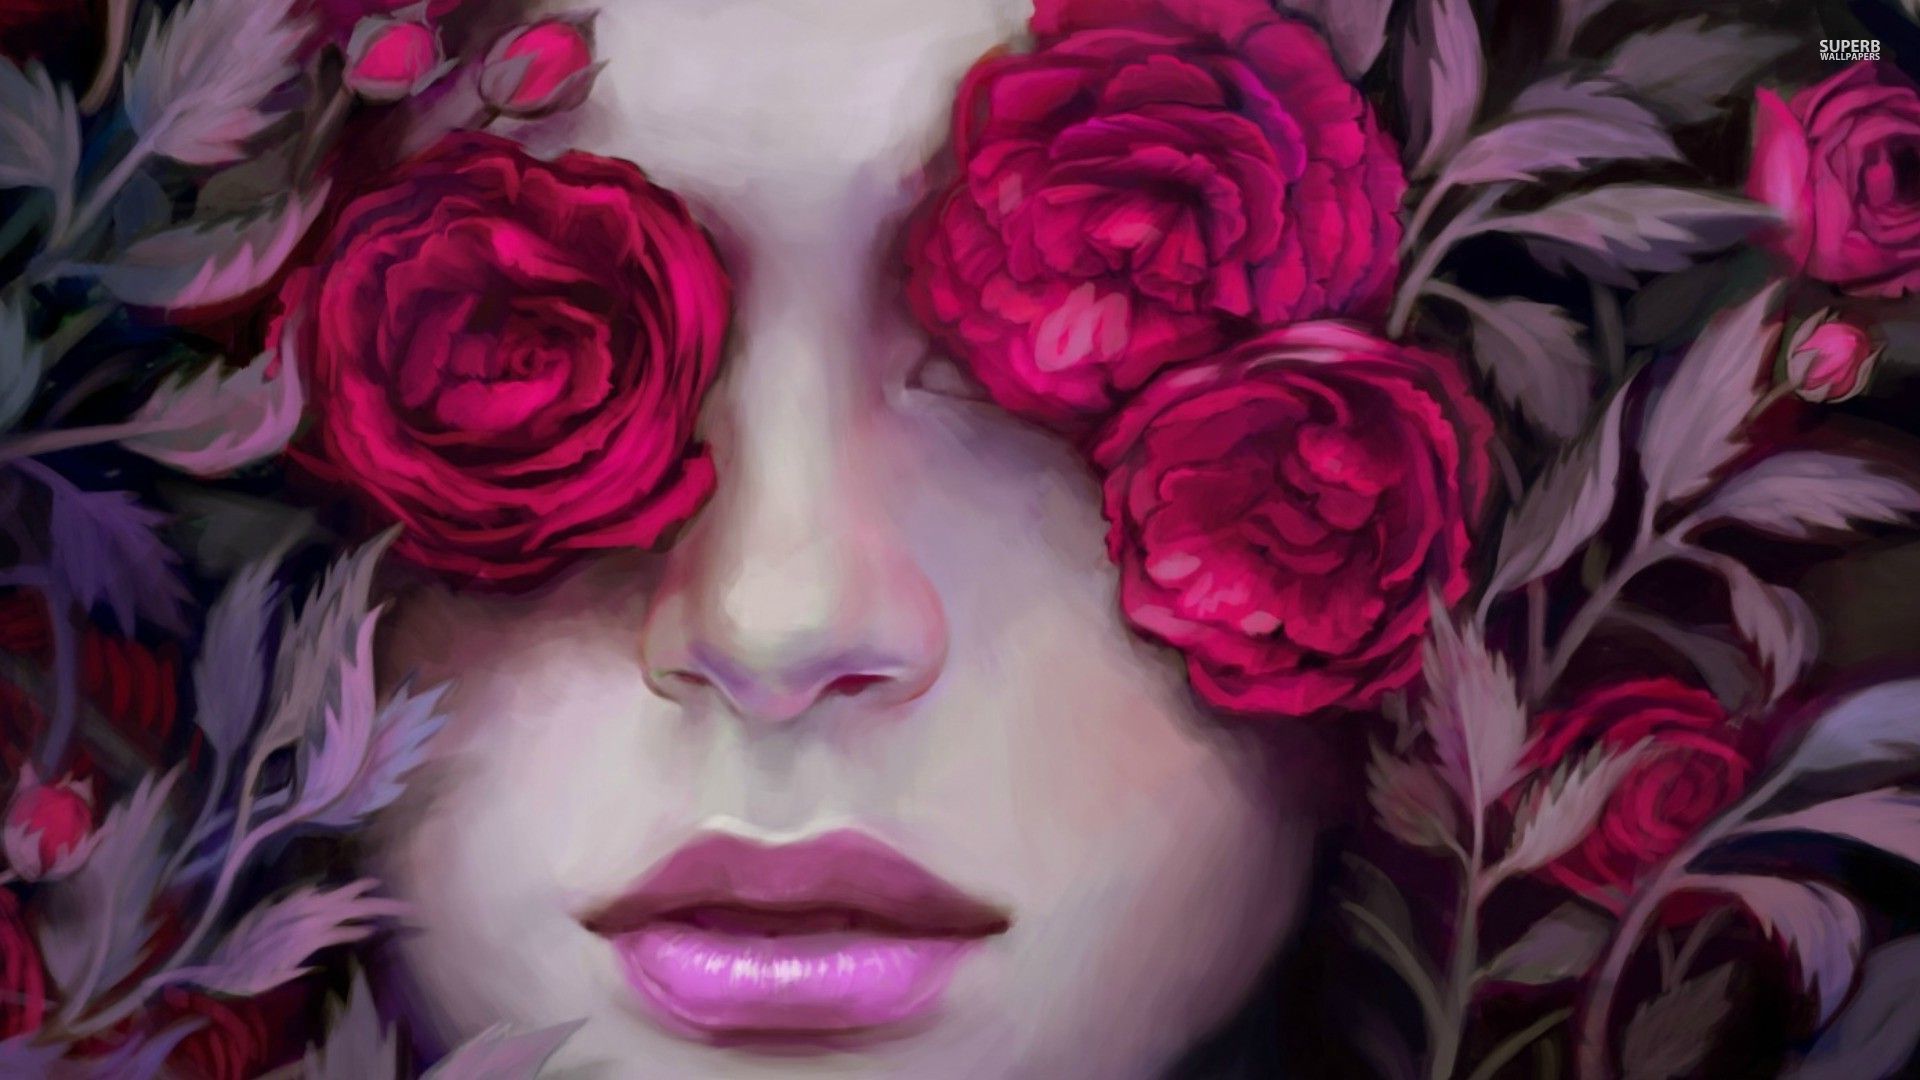 Woman hiding behind pink roses wallpaper - Artistic wallpapers